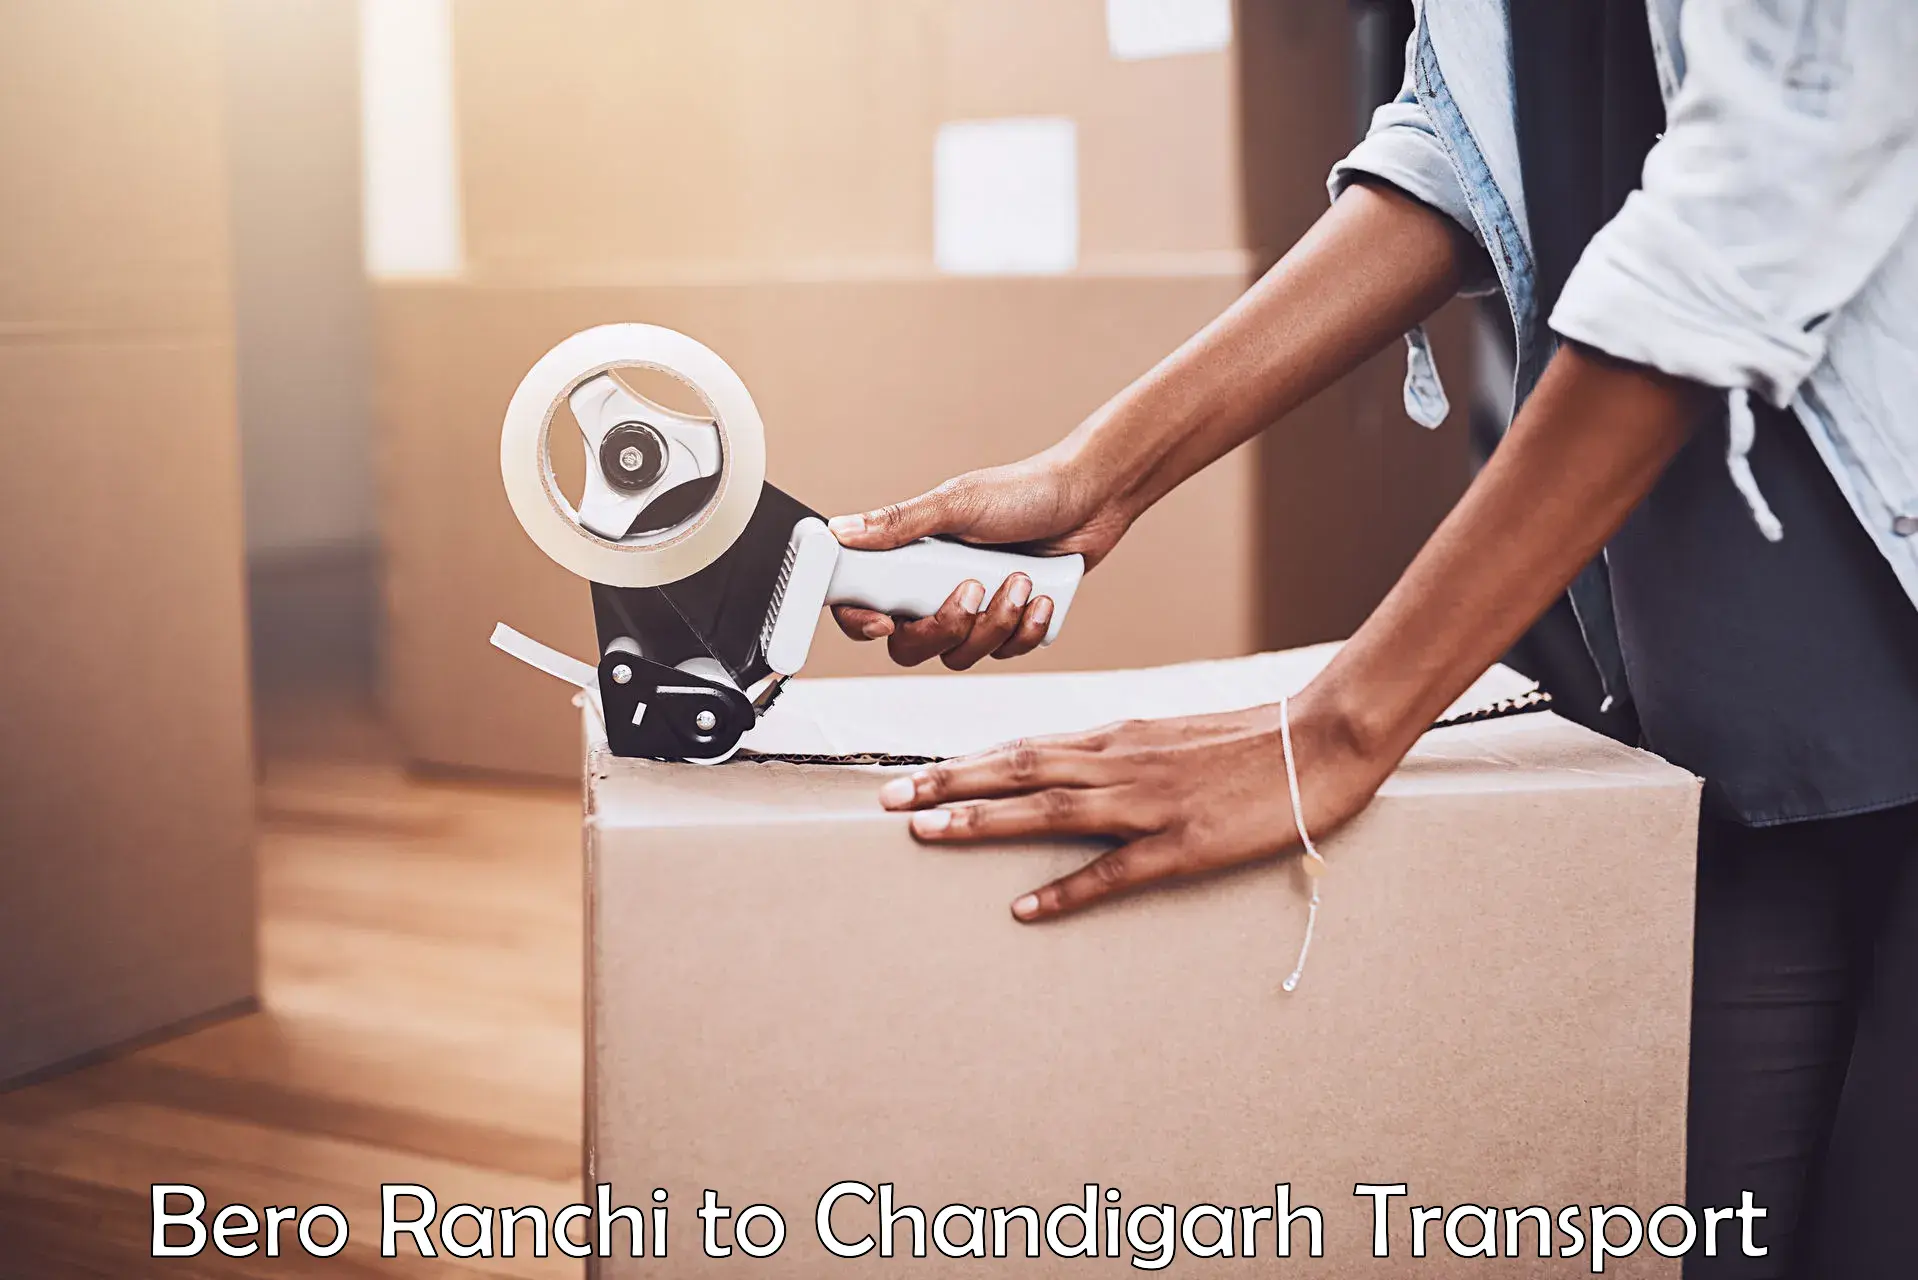 Furniture transport service Bero Ranchi to Chandigarh